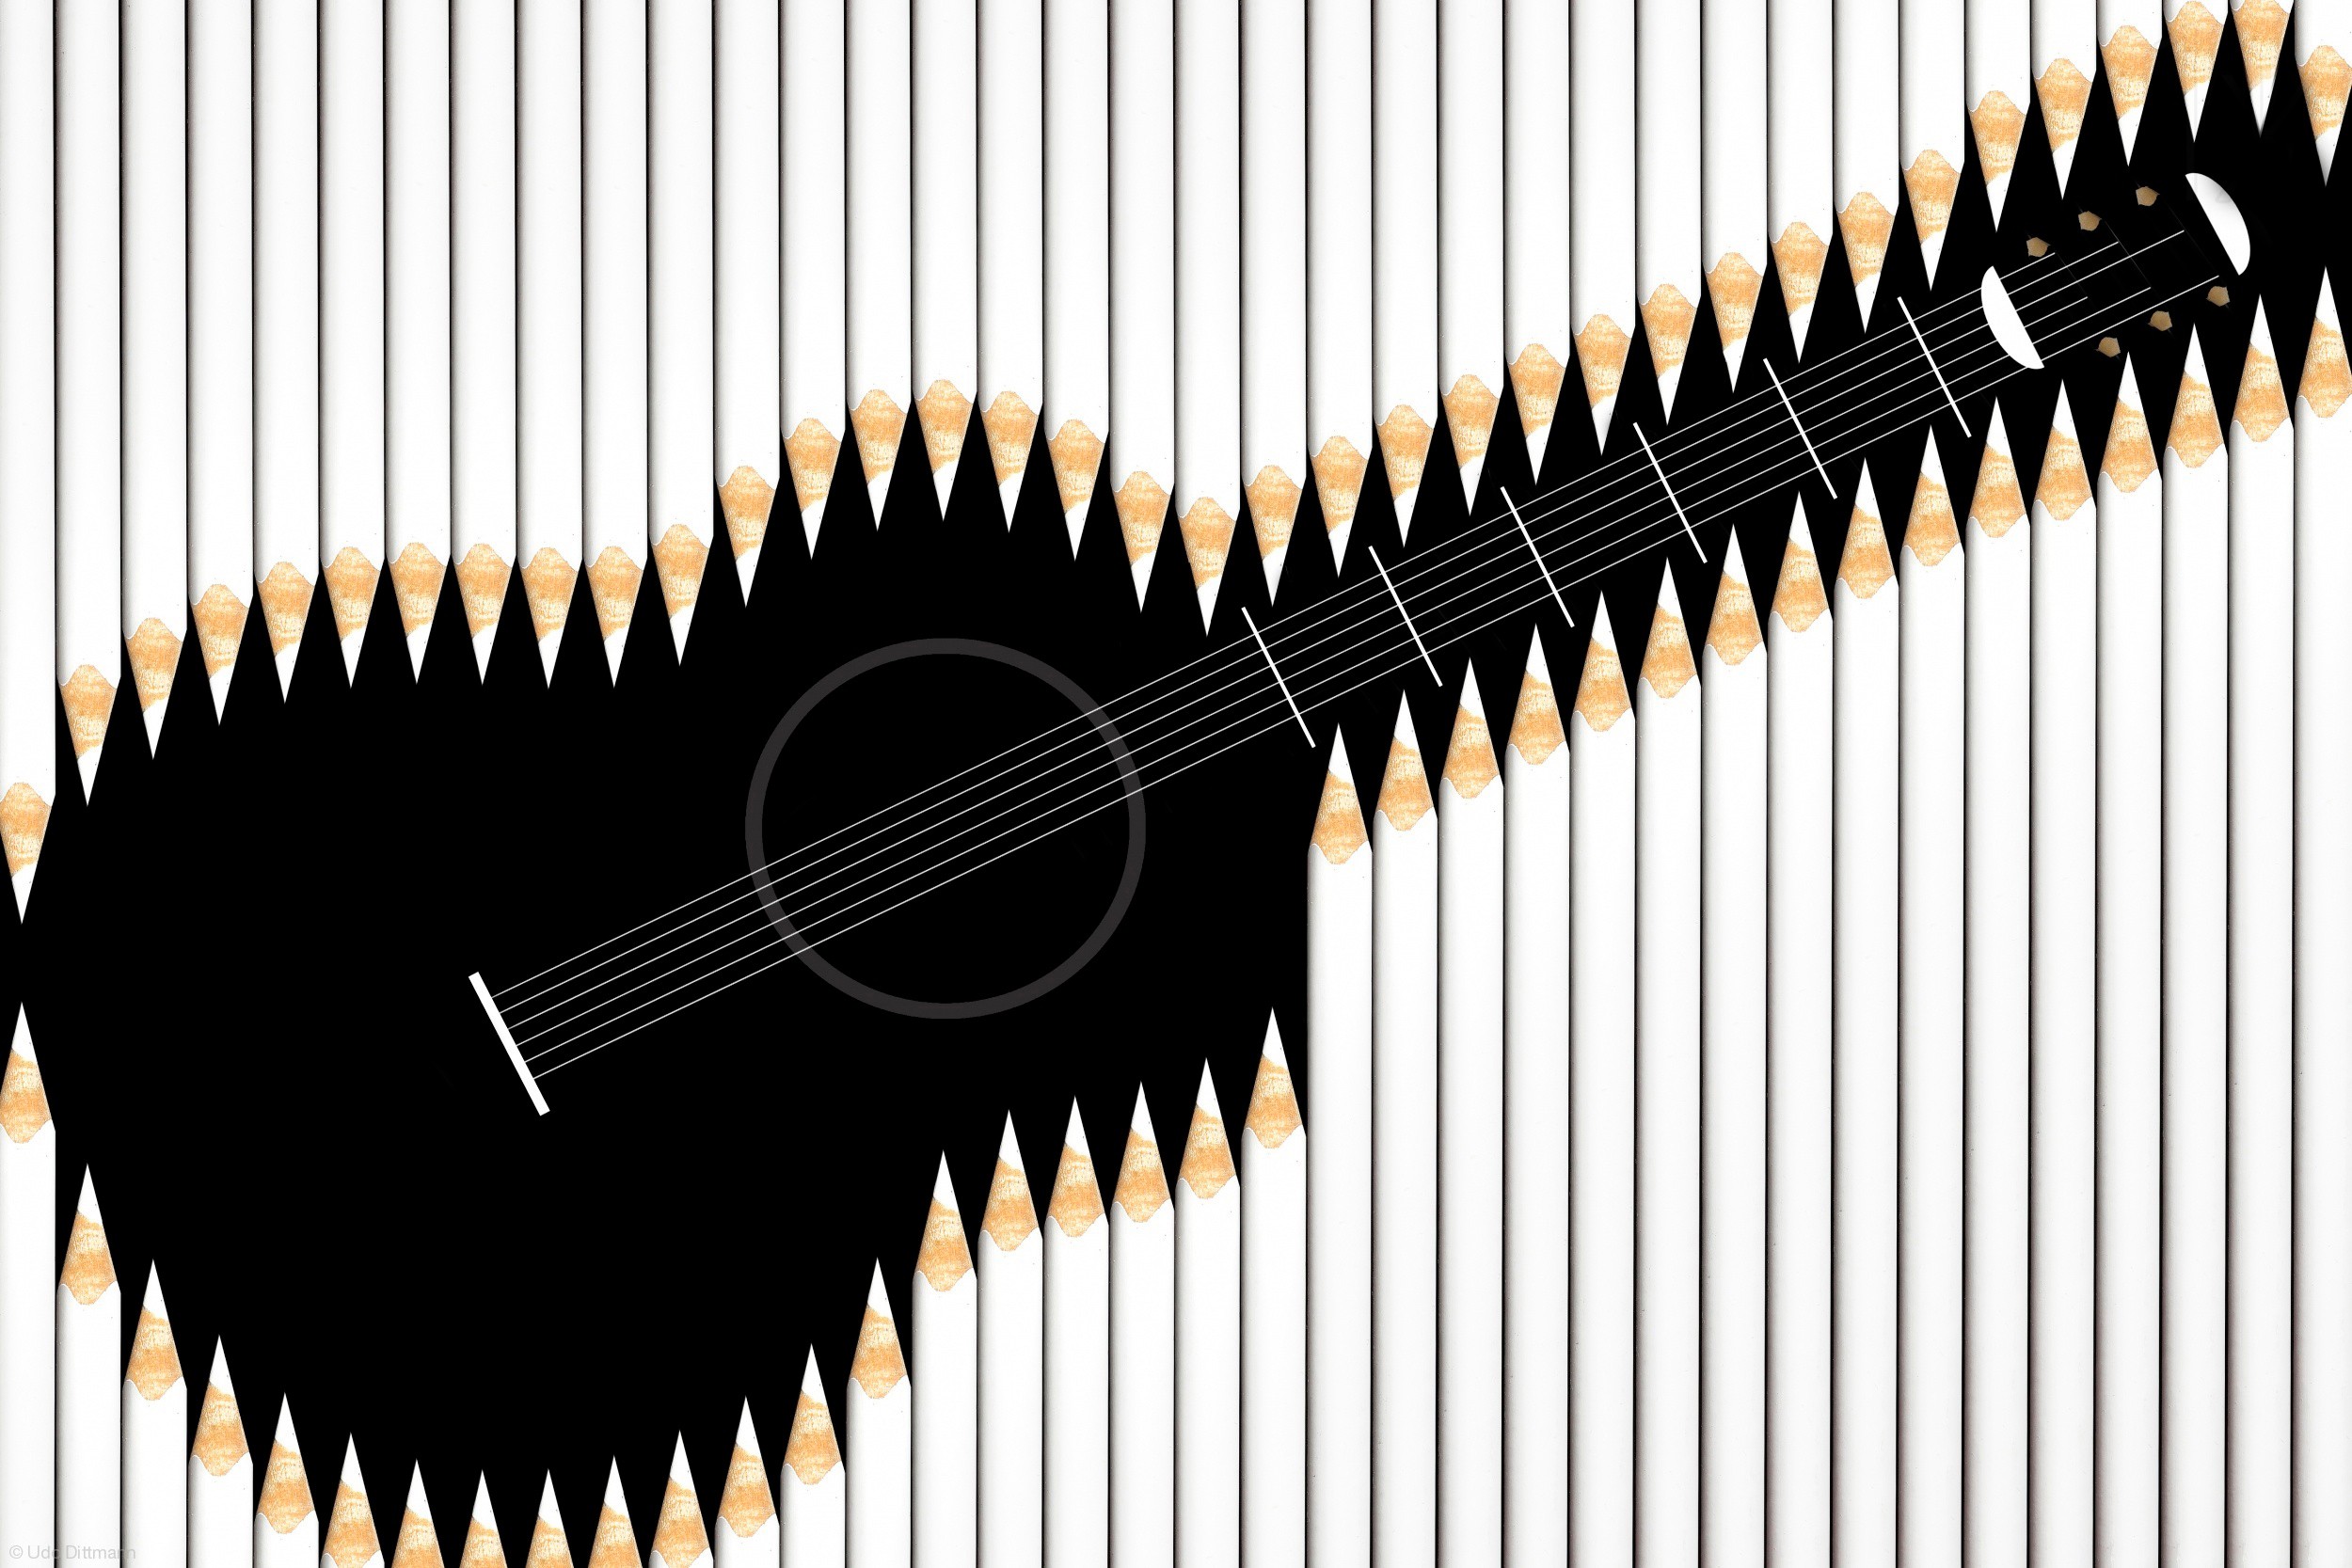 General 2500x1667 digital art artwork guitar black background white pencils strings imagination musical instrument